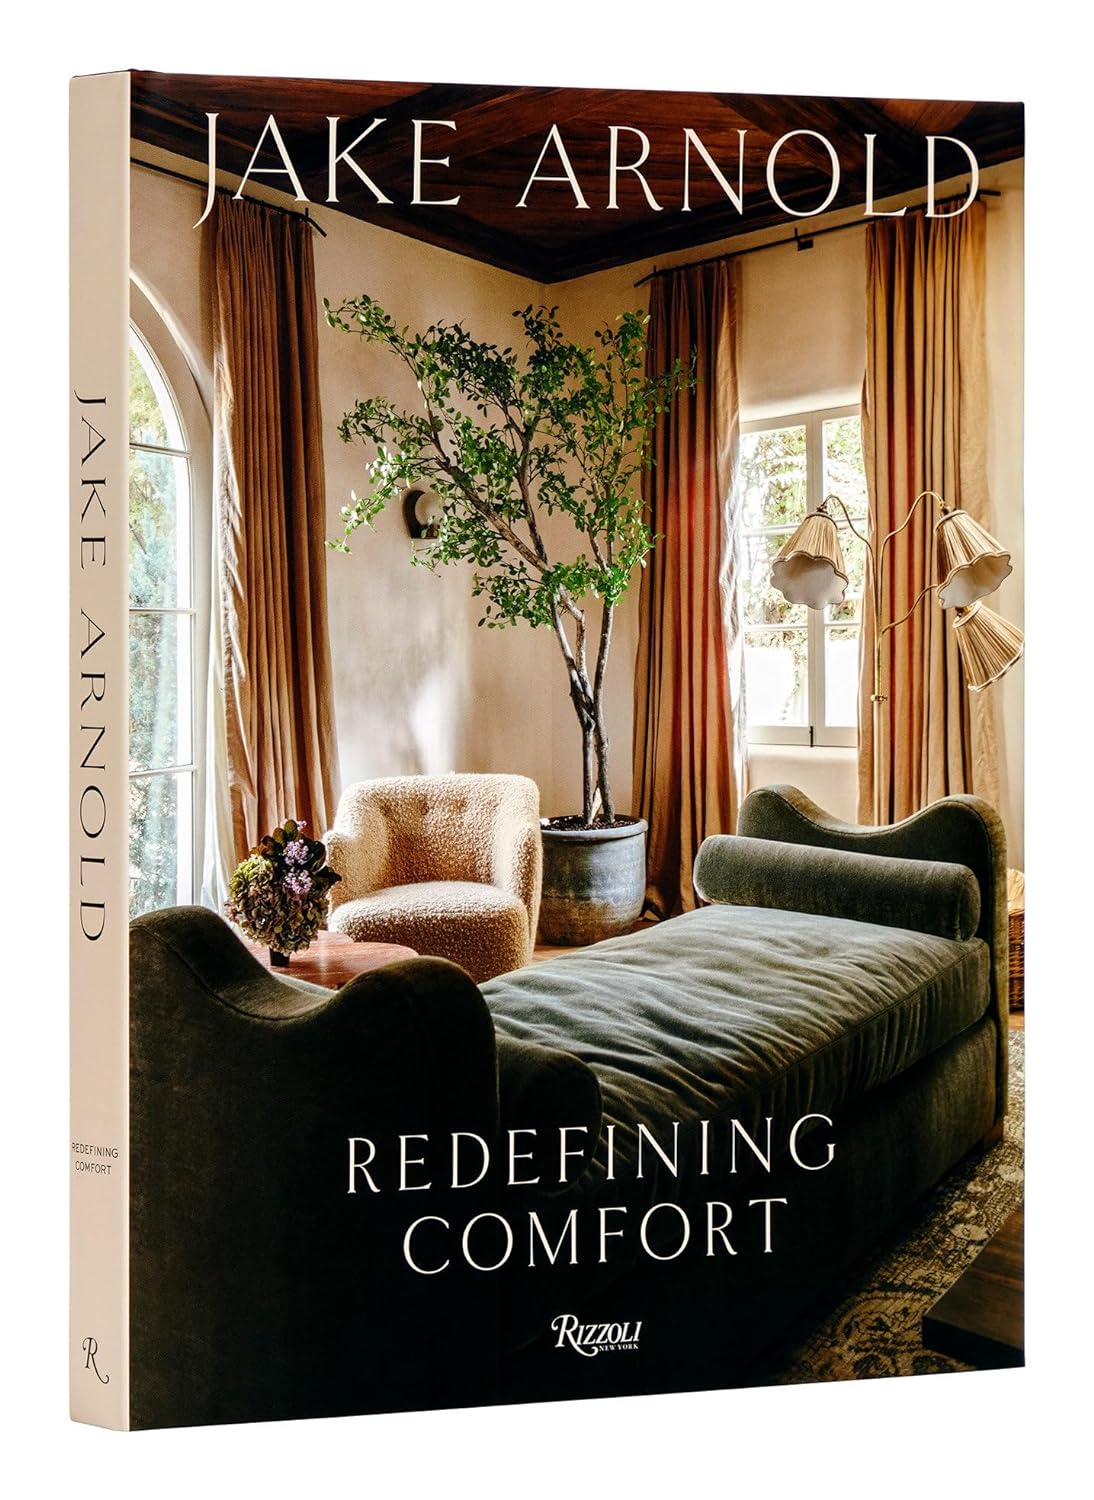 Refining comfort by Jake Arnold